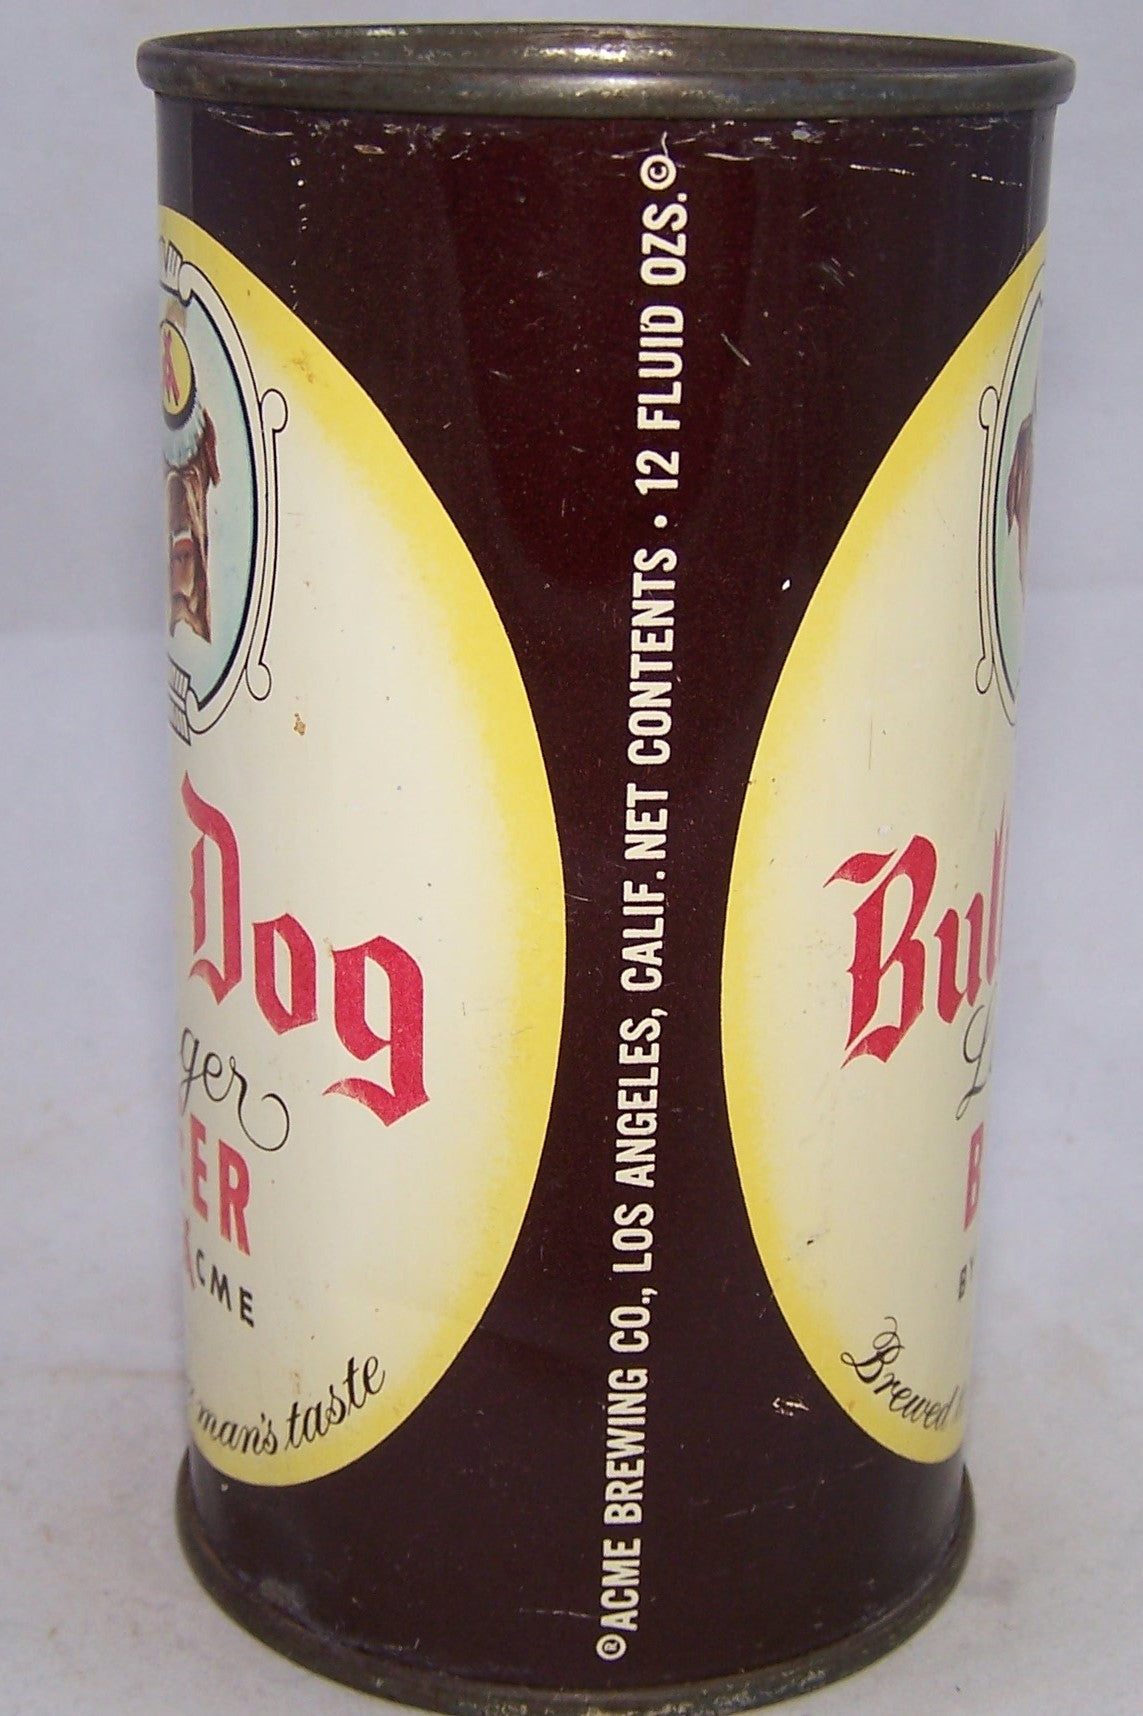 Bull Dog Lager Beer, USBC 45-16, Grade 1- Sold on 07/27/18